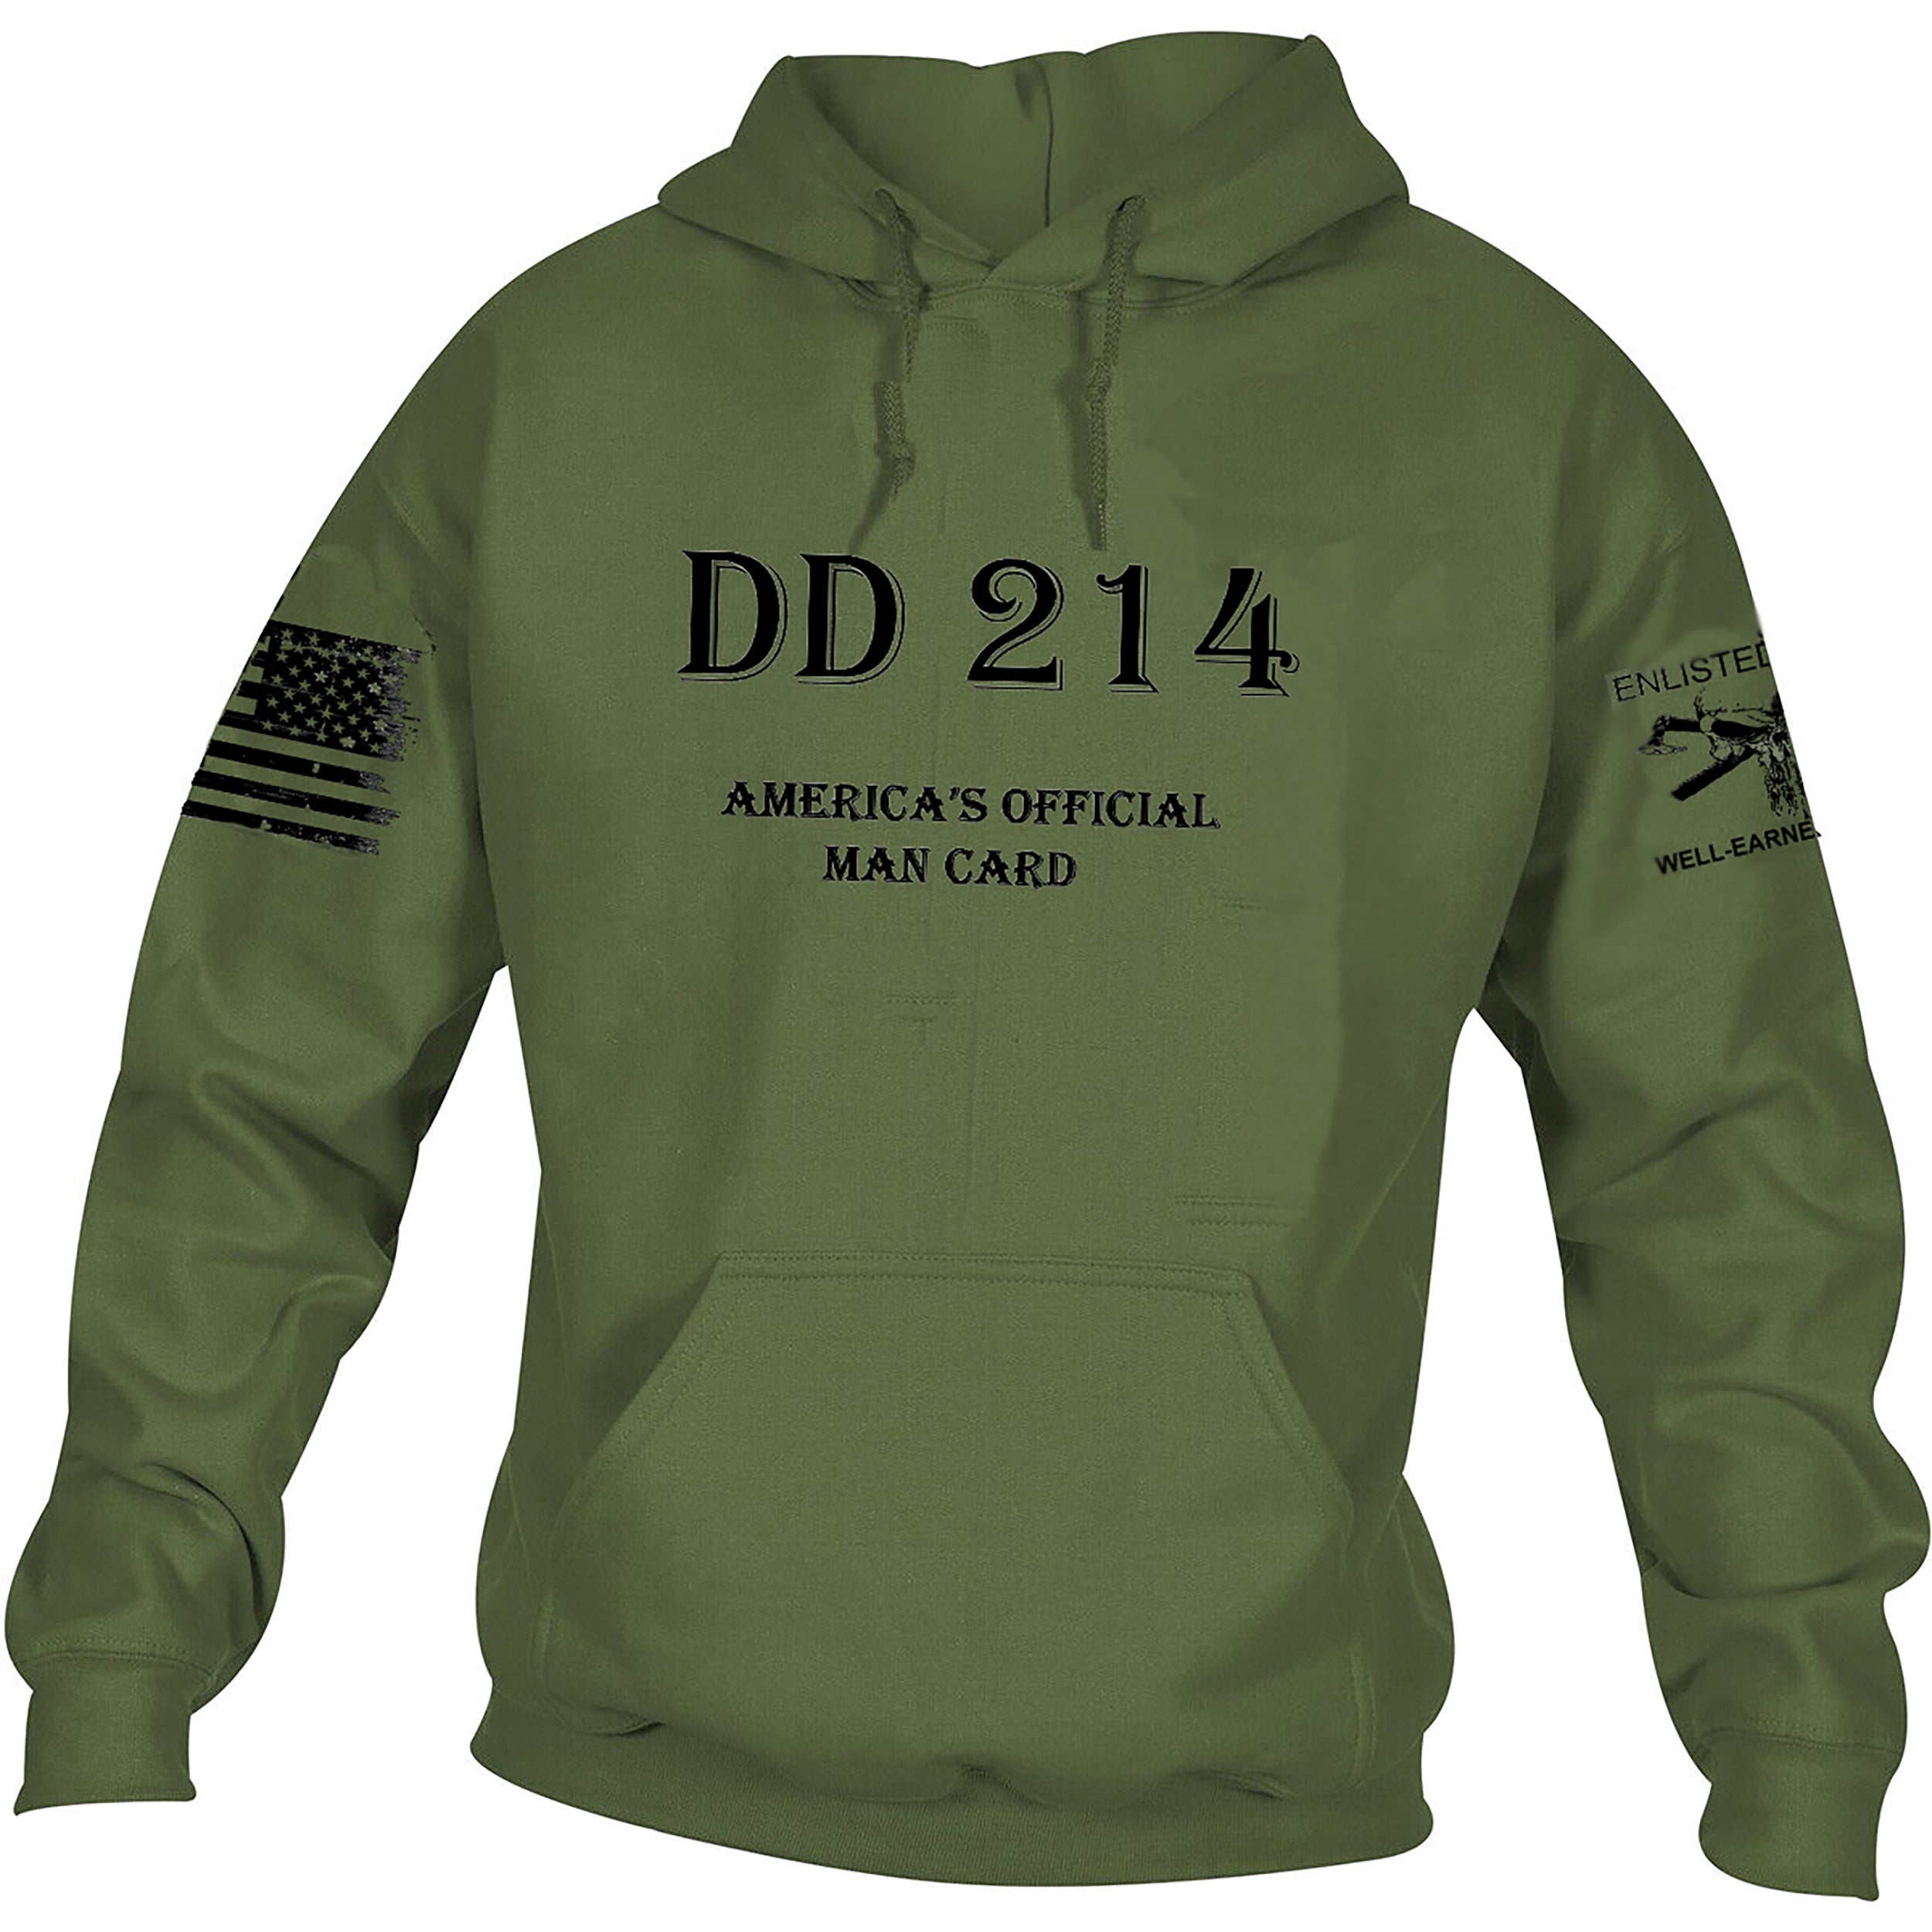 DD 214, Hoodie, Military Green